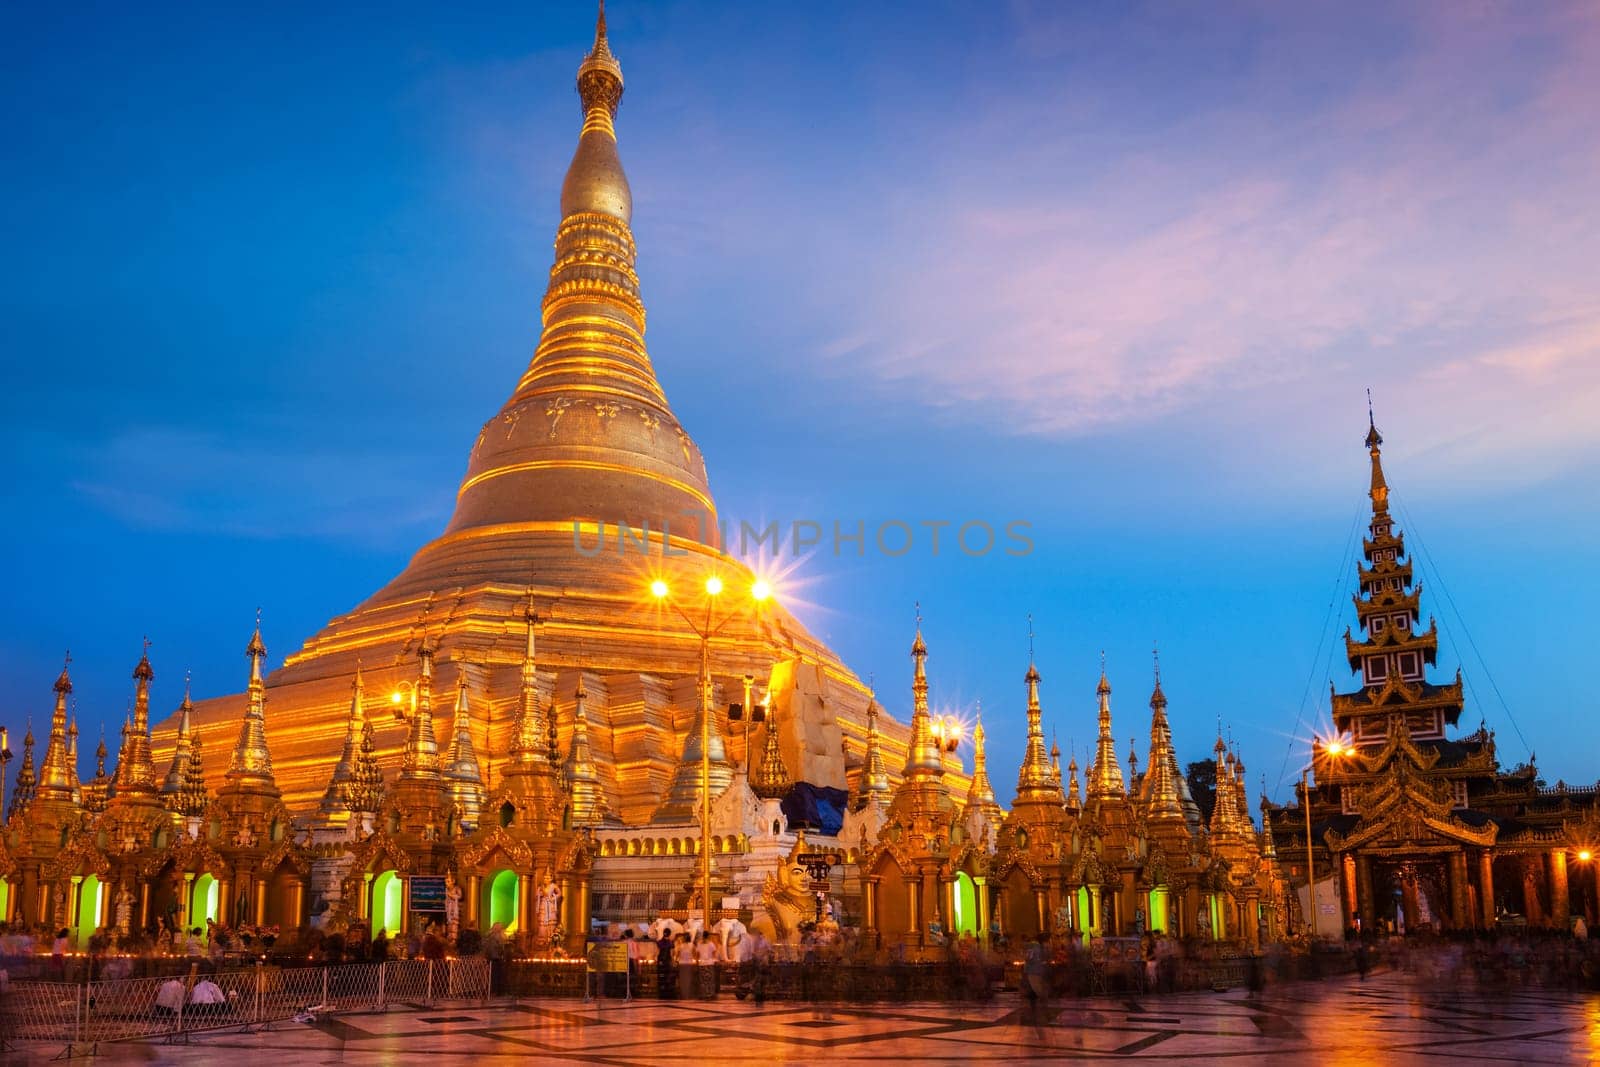 Shwedagon pagoda in the evening by dimol